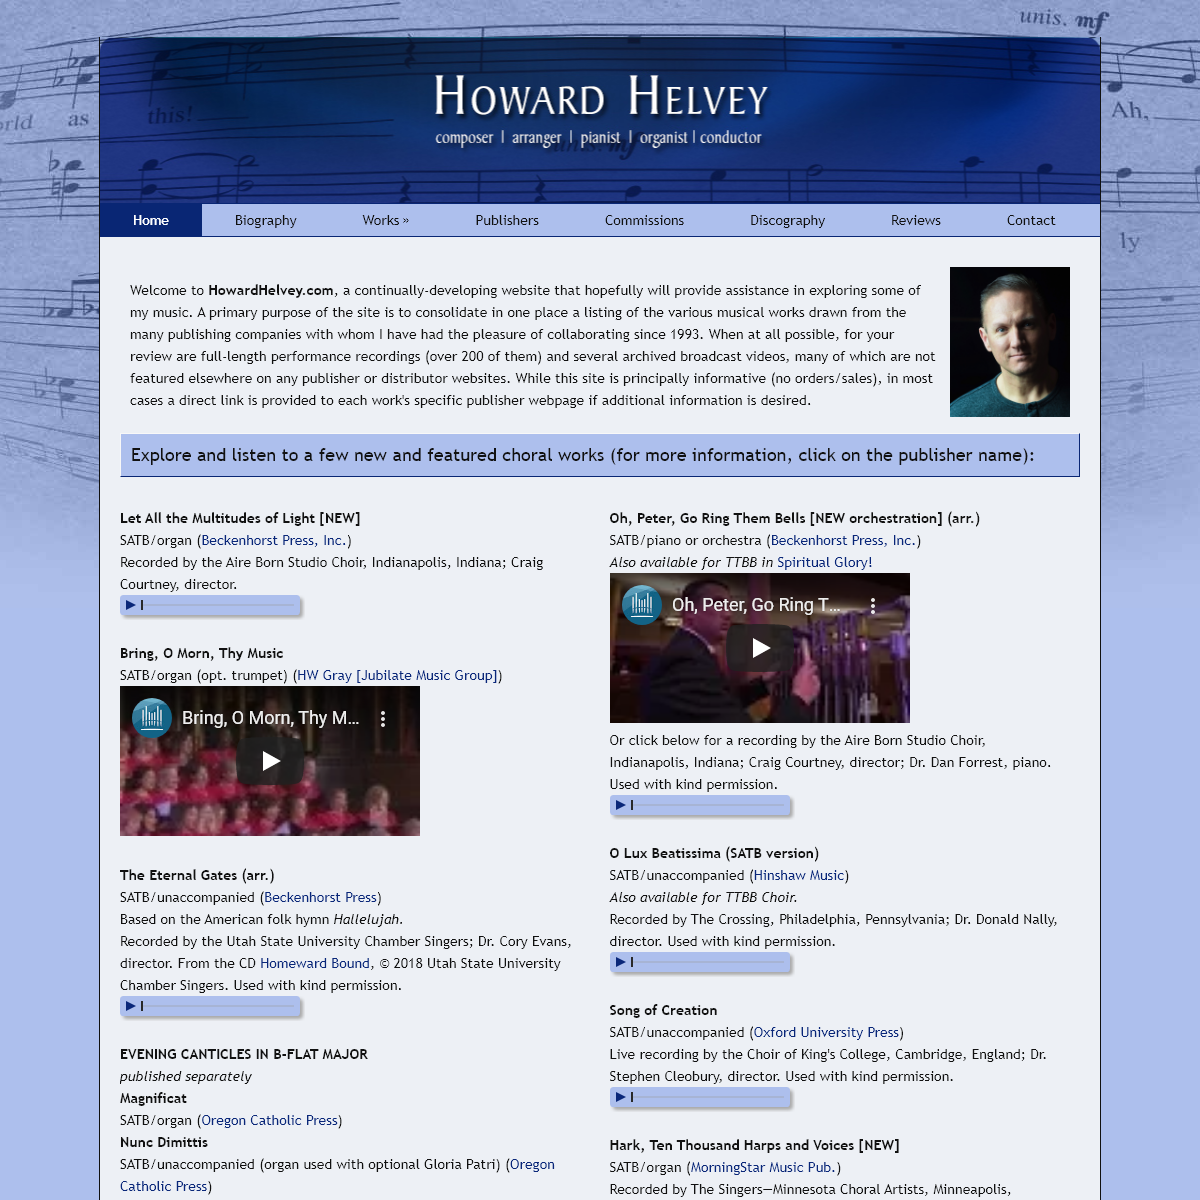 A complete backup of howardhelvey.com